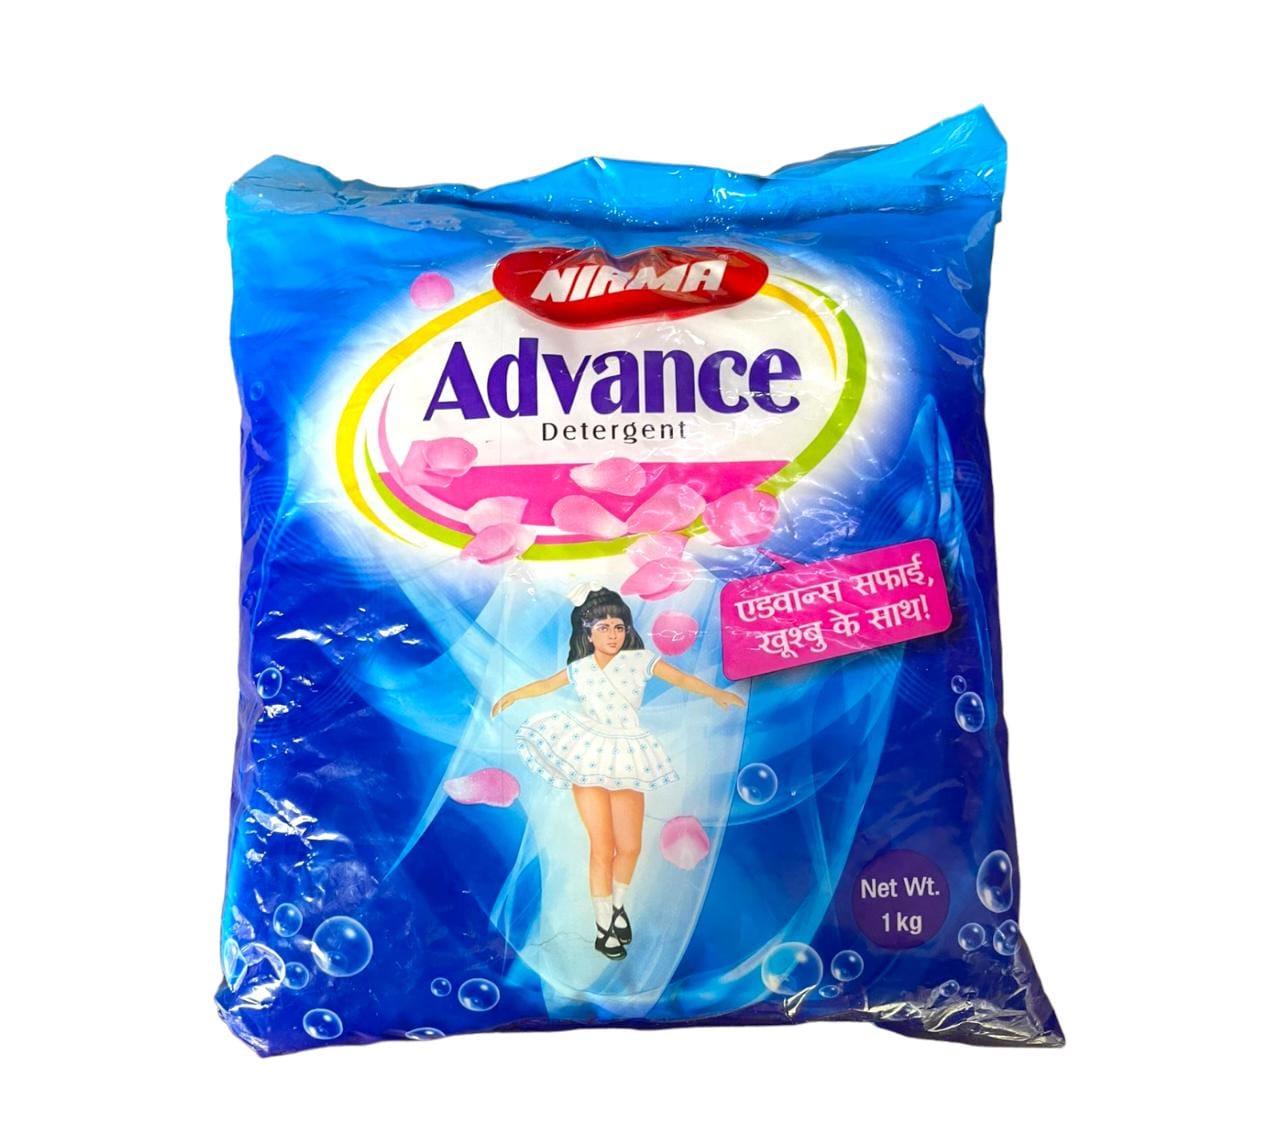 Nirma advance detergent powder